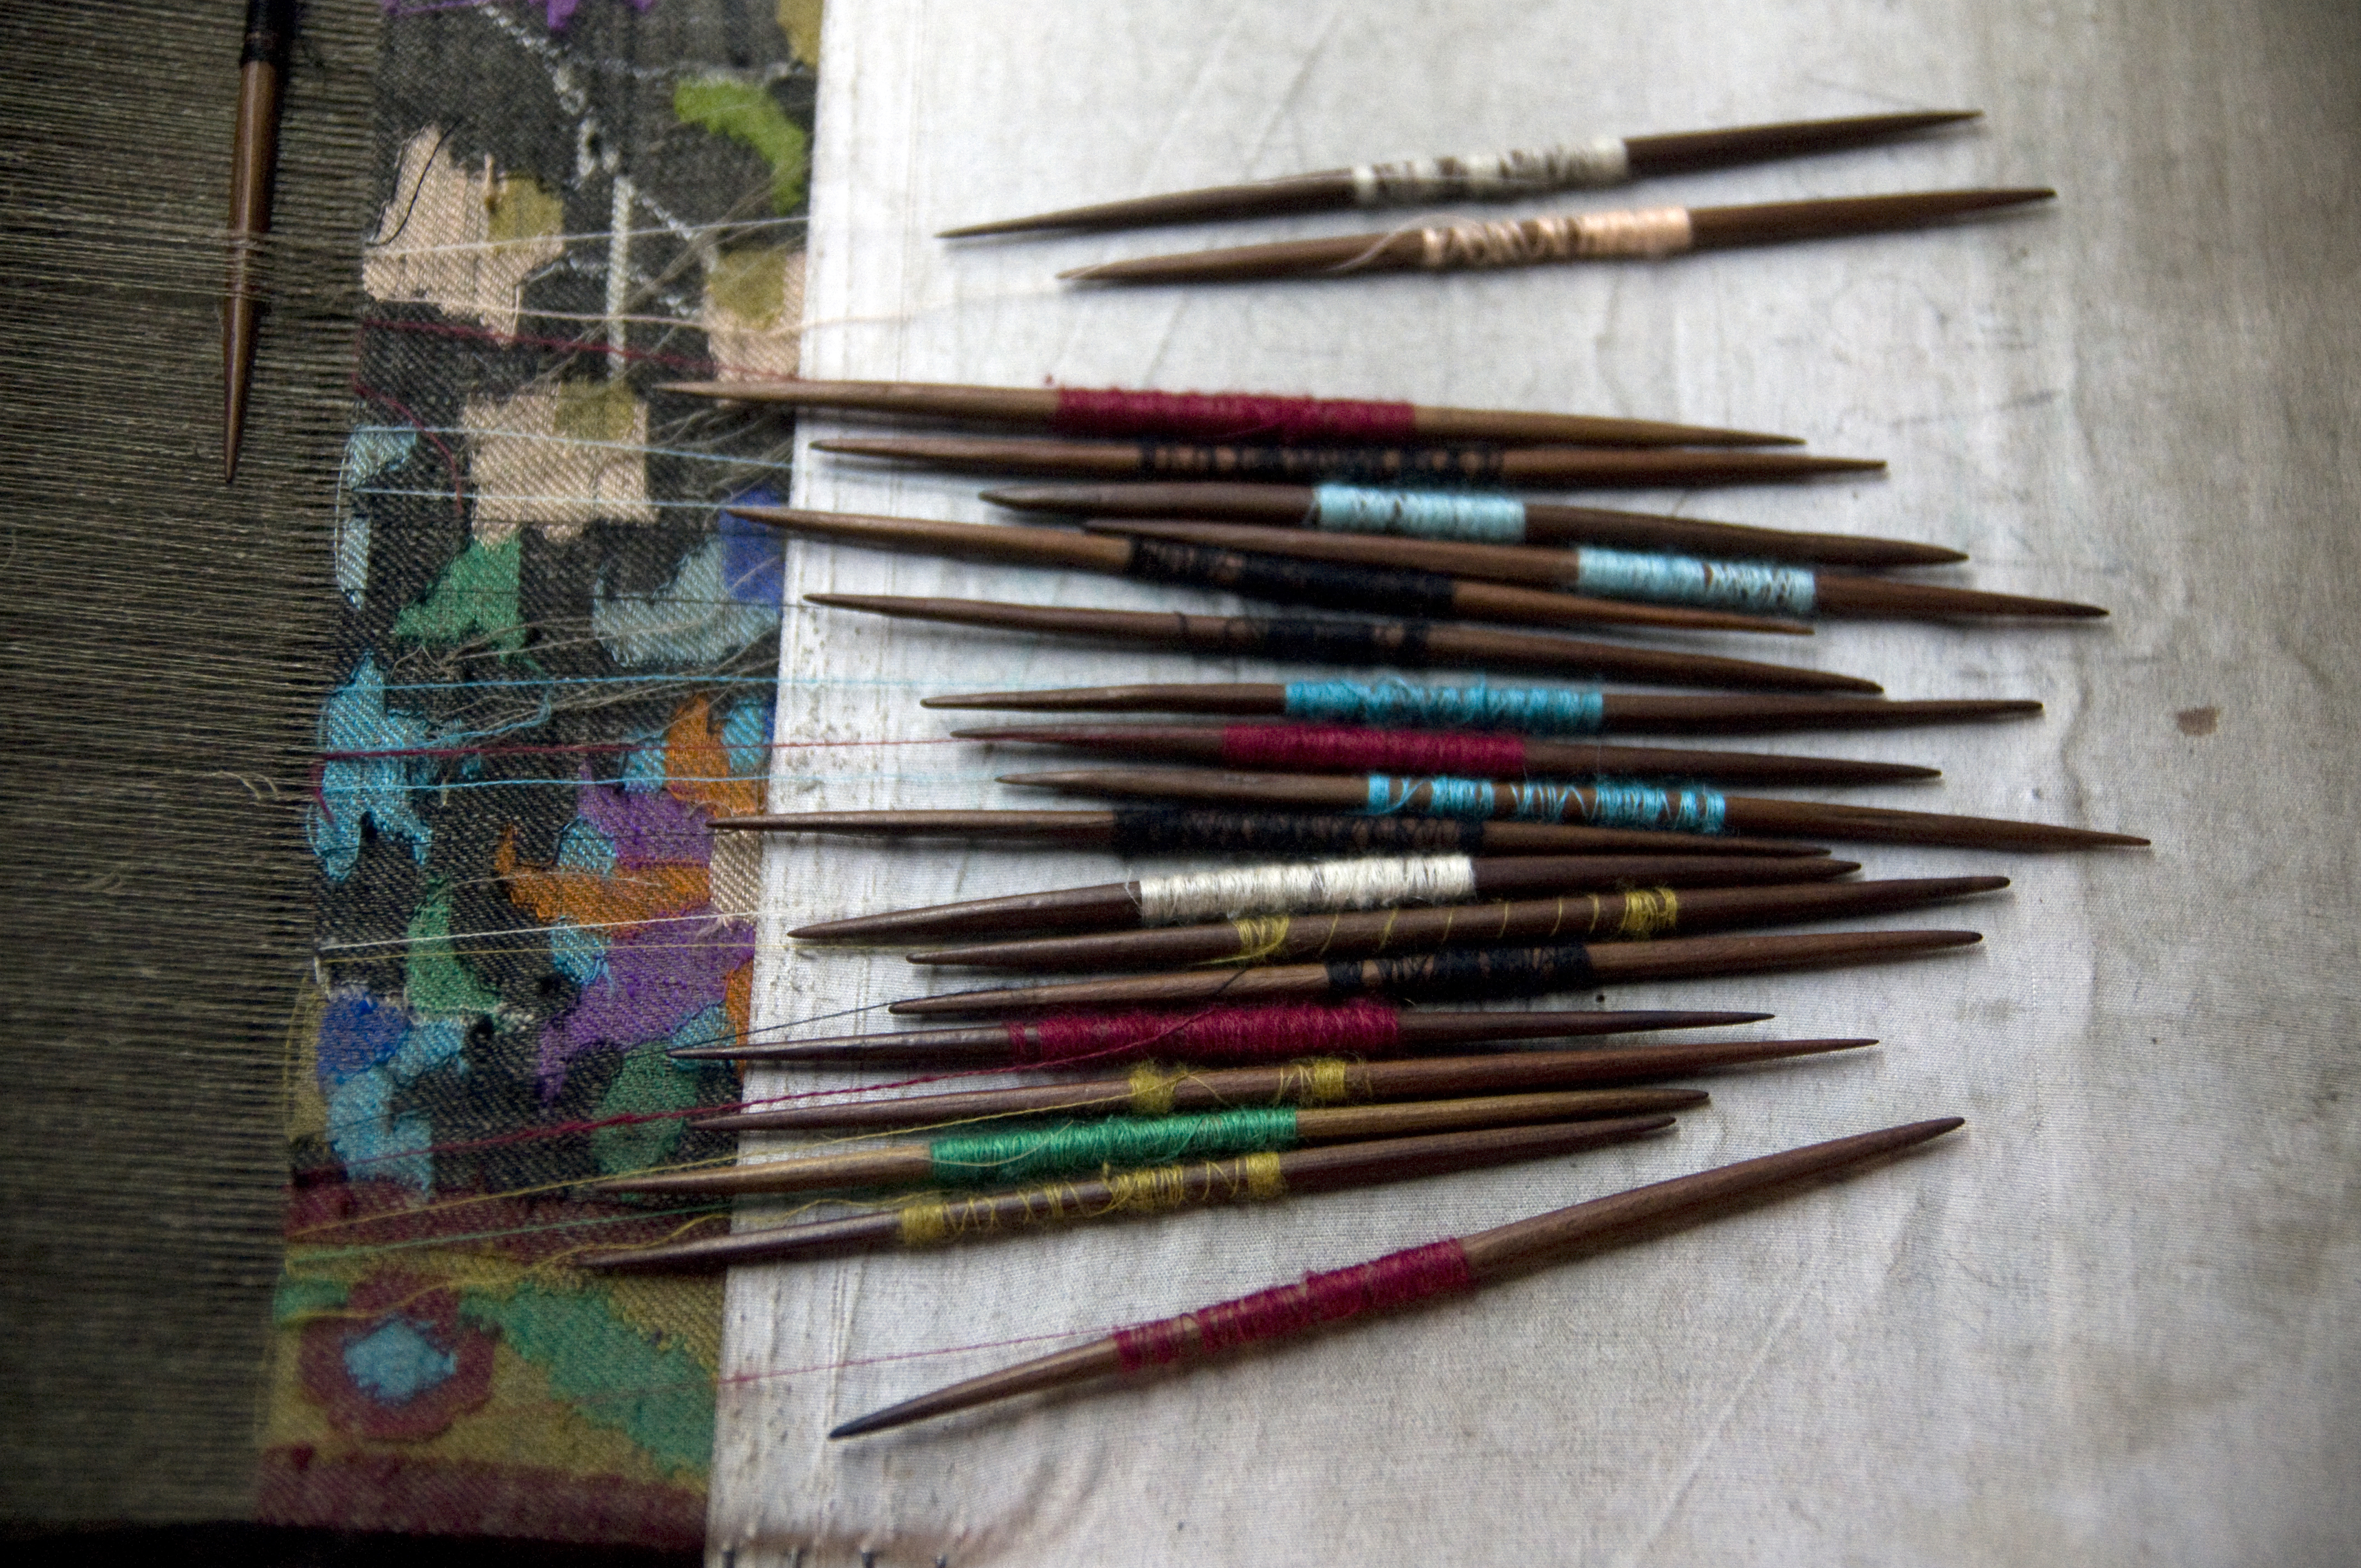 Kani weaving needles (photo: Sugato Mukherjee)